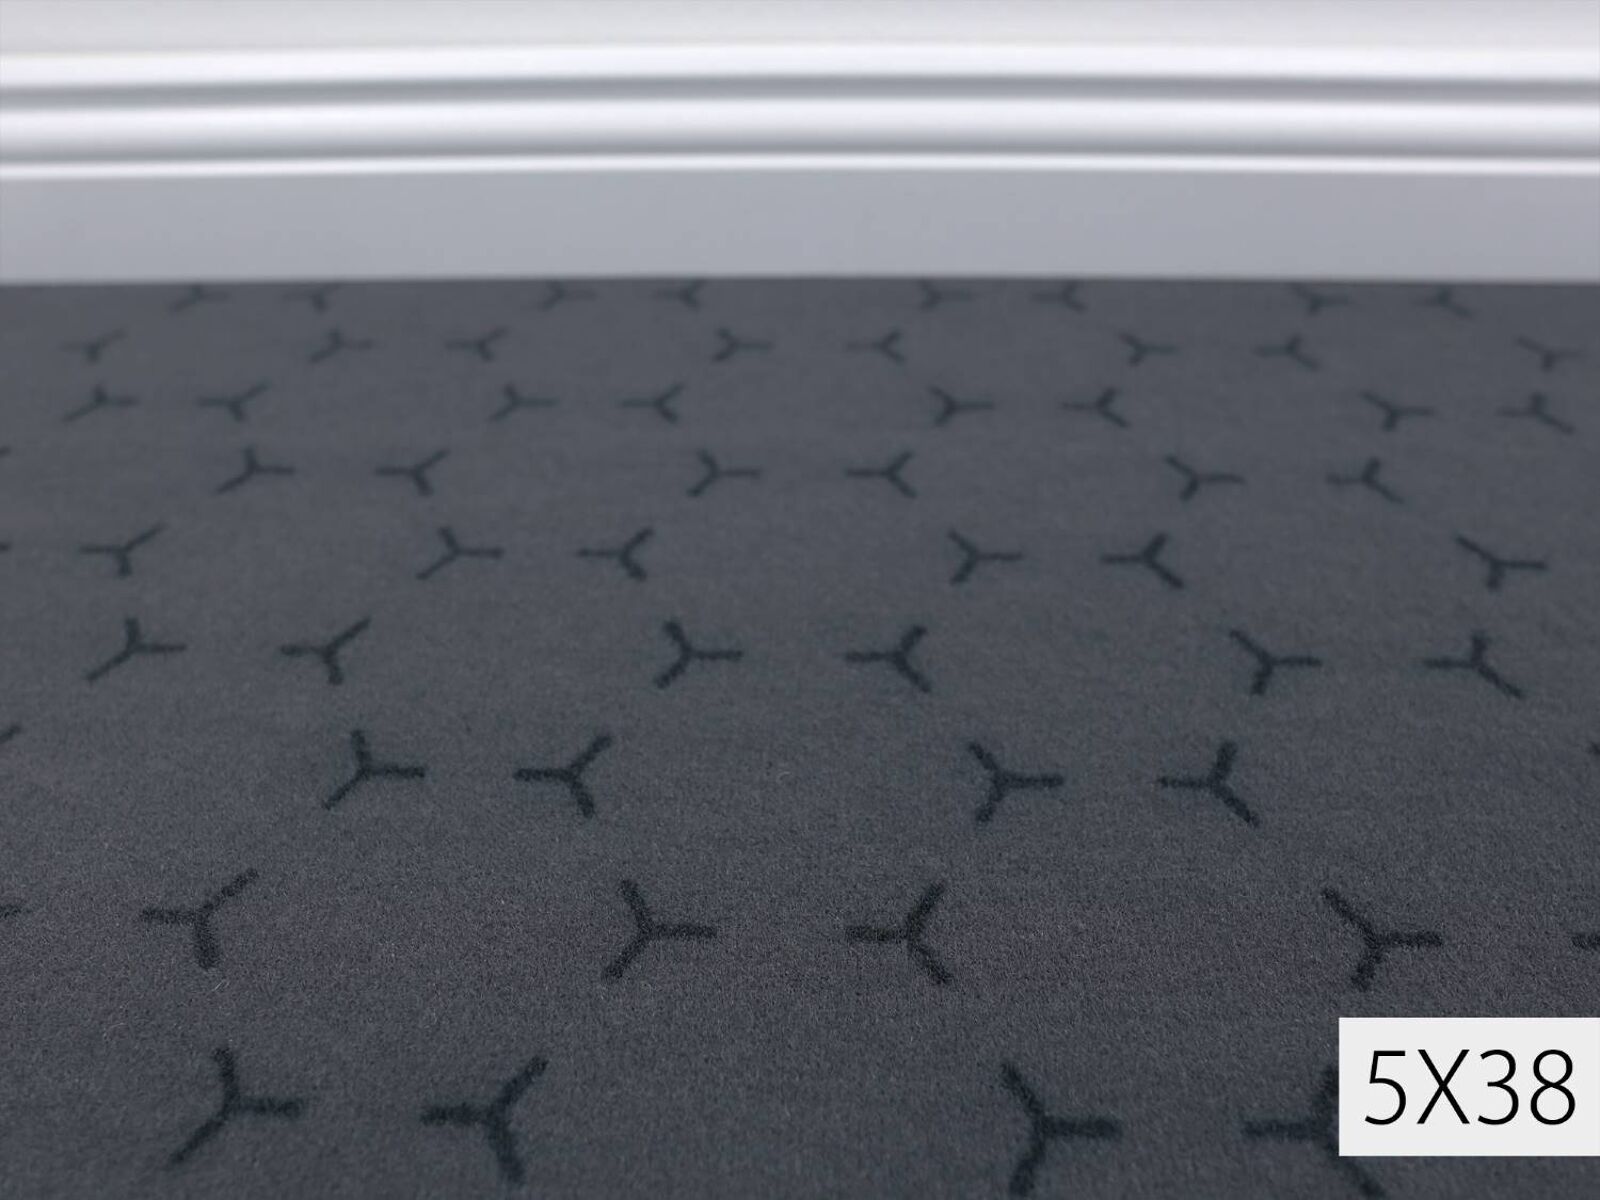 Forma Teppichboden | Classic Design 4325-1| 400cm Breite & Raummaß